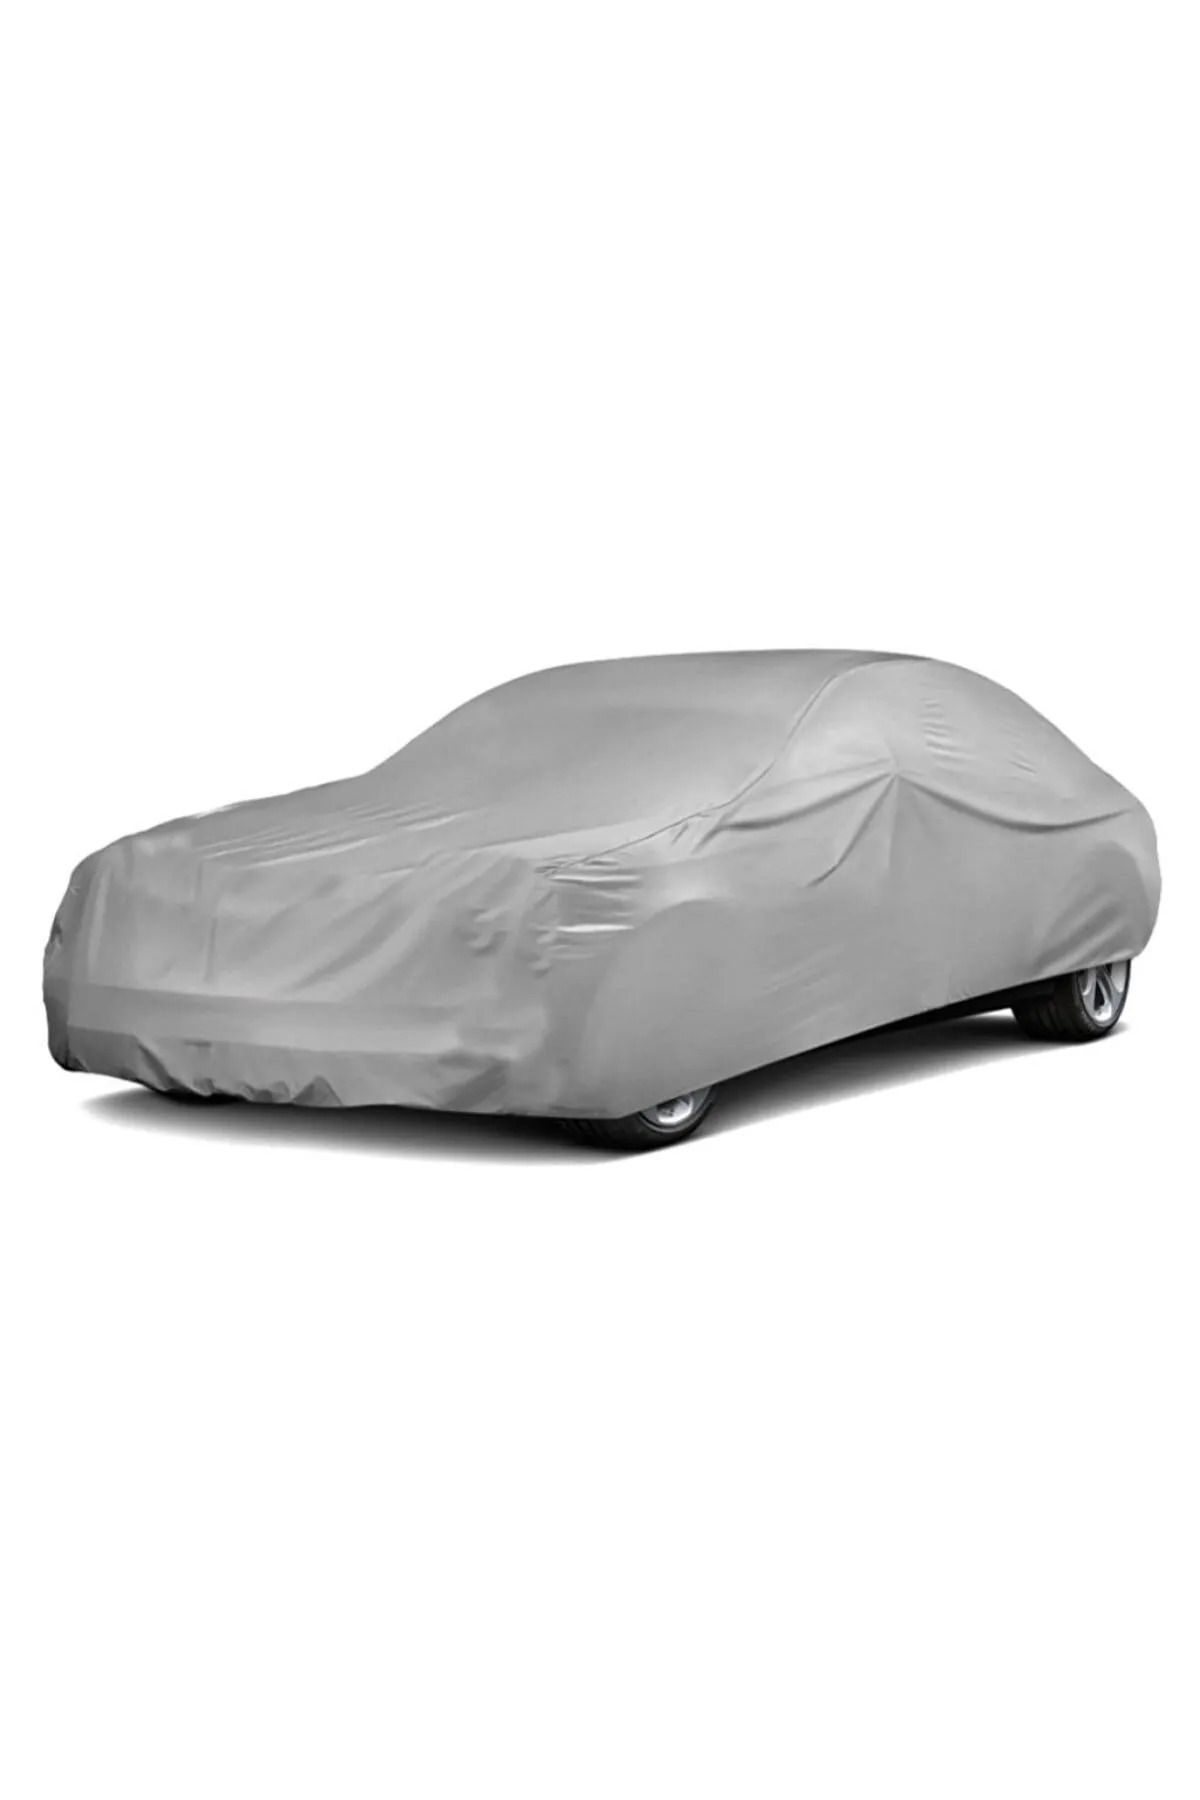 PlusOto Opel Mokka X Compatible Car Tarpaulin, Vehicle Cover, Tent